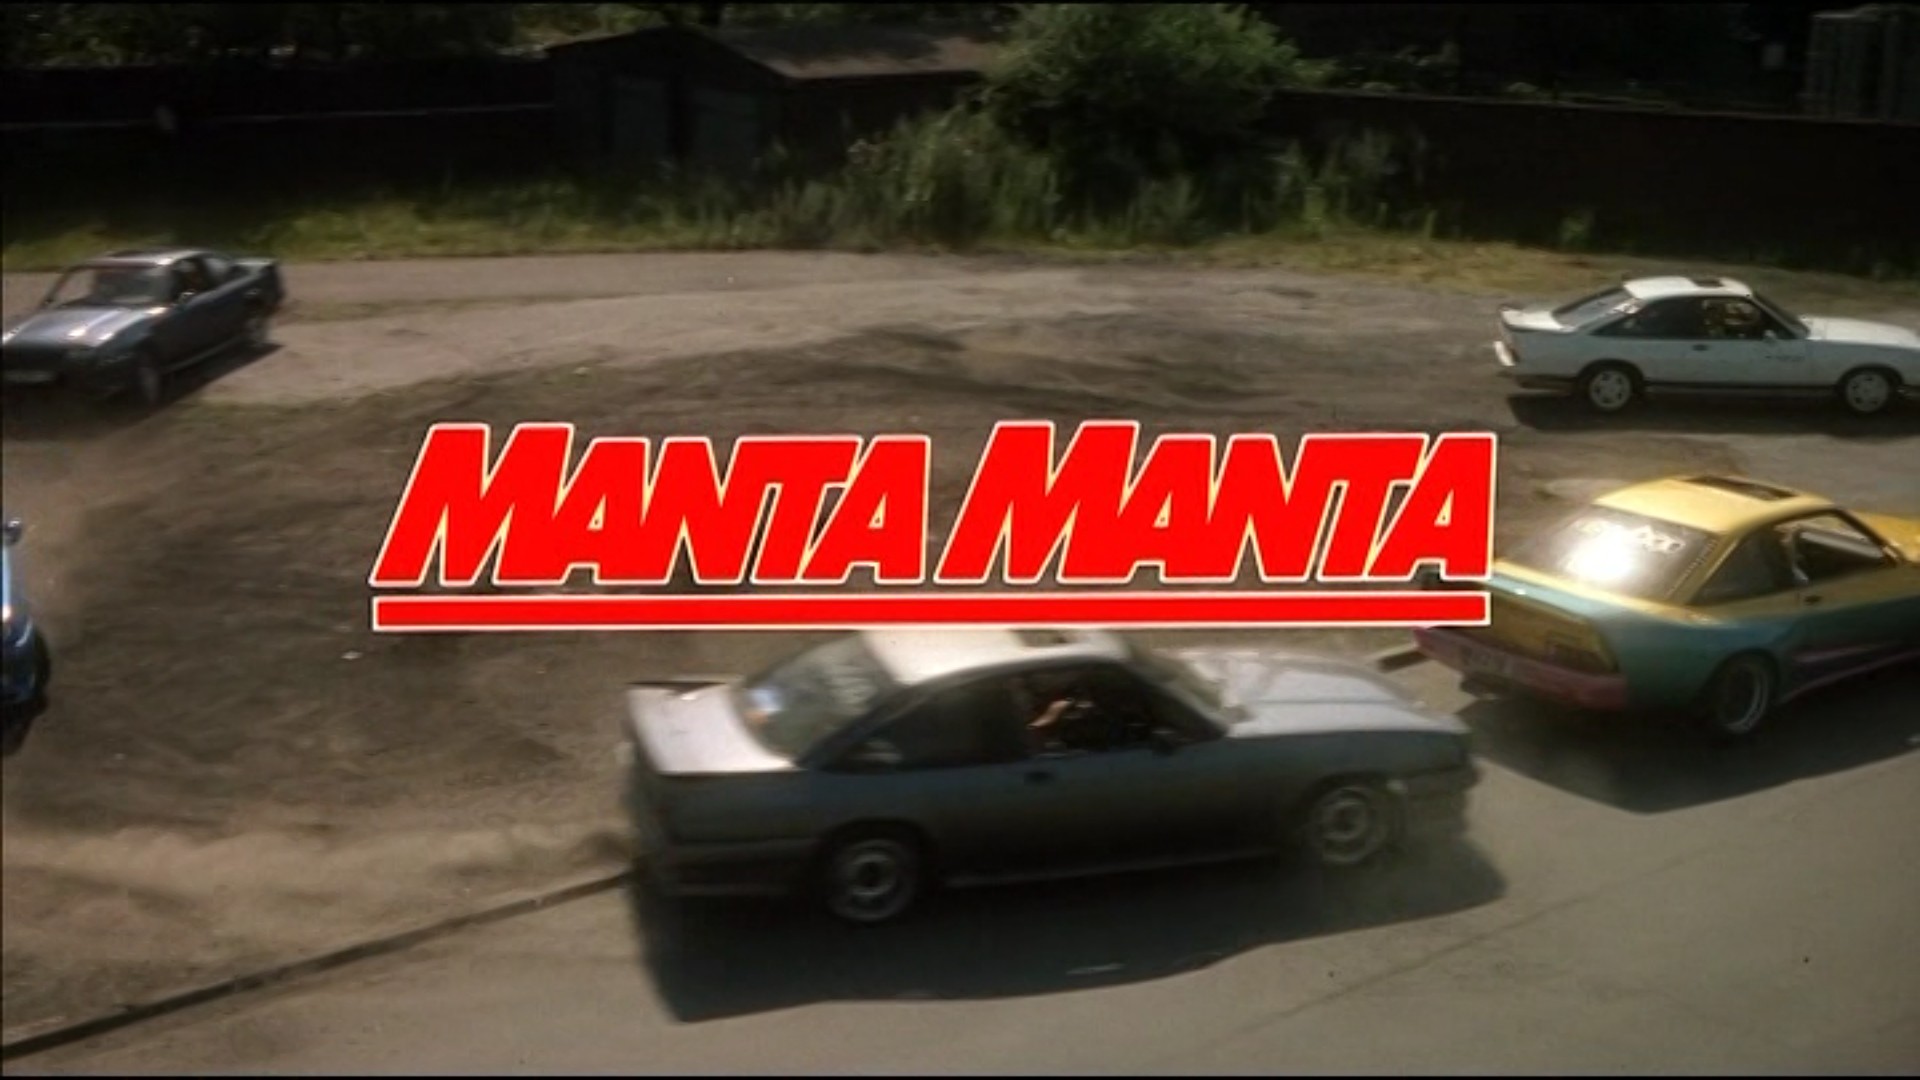 Titelbildschirm vom Film Manta, Manta